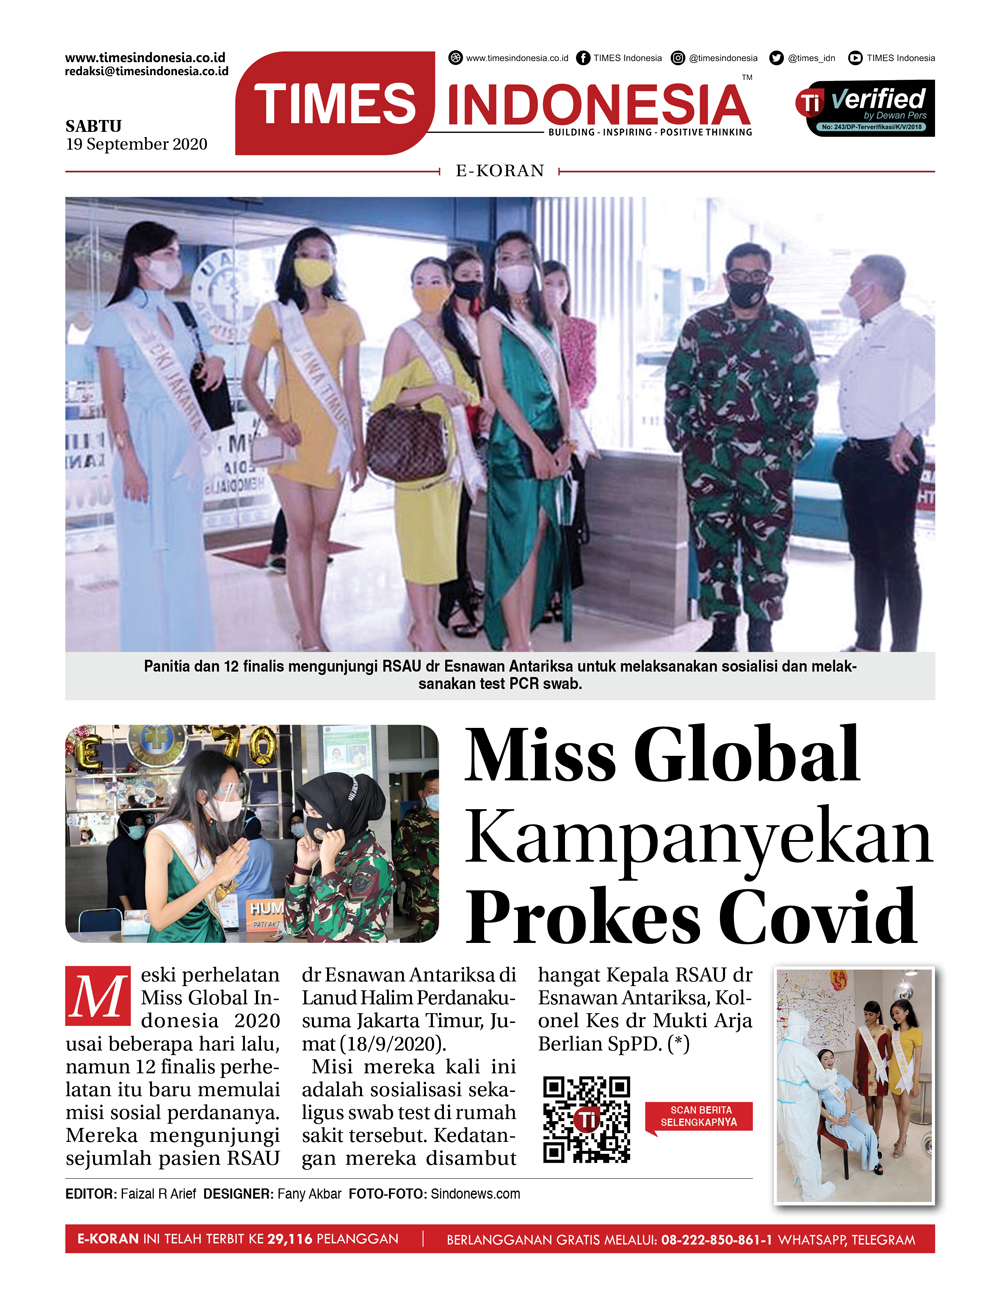 Edisi-Sabtu-19-September-2020-Miss-Global-Kampanyekan-Prokes-Covid.jpg